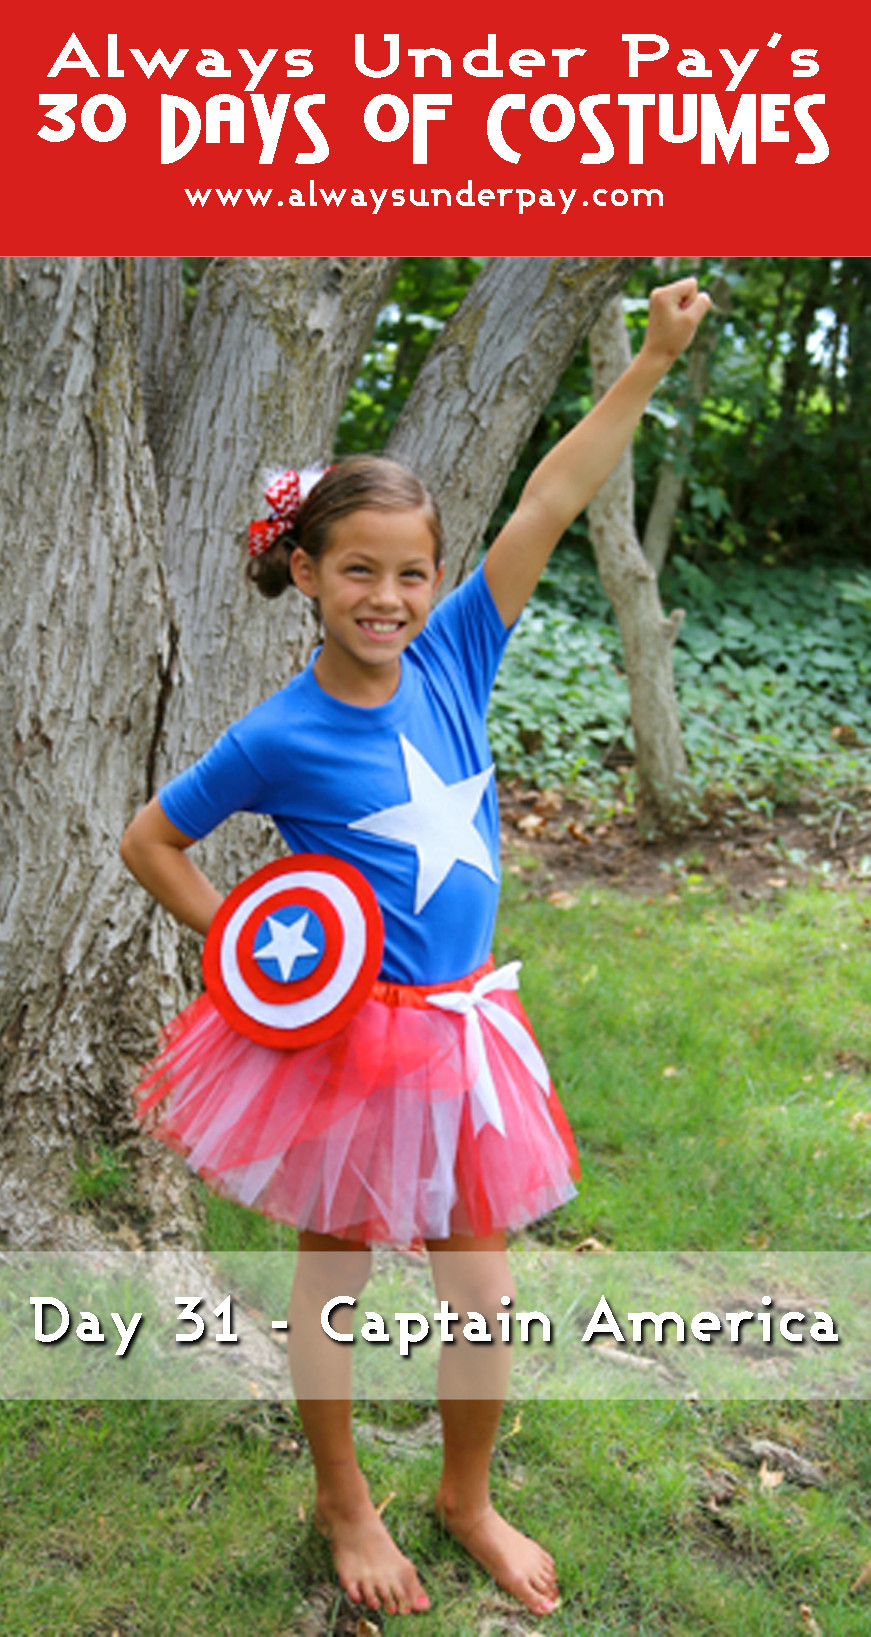 DIY Captain America Costume
 Day 31 – Captain America DIY Halloween Costume Tutorial